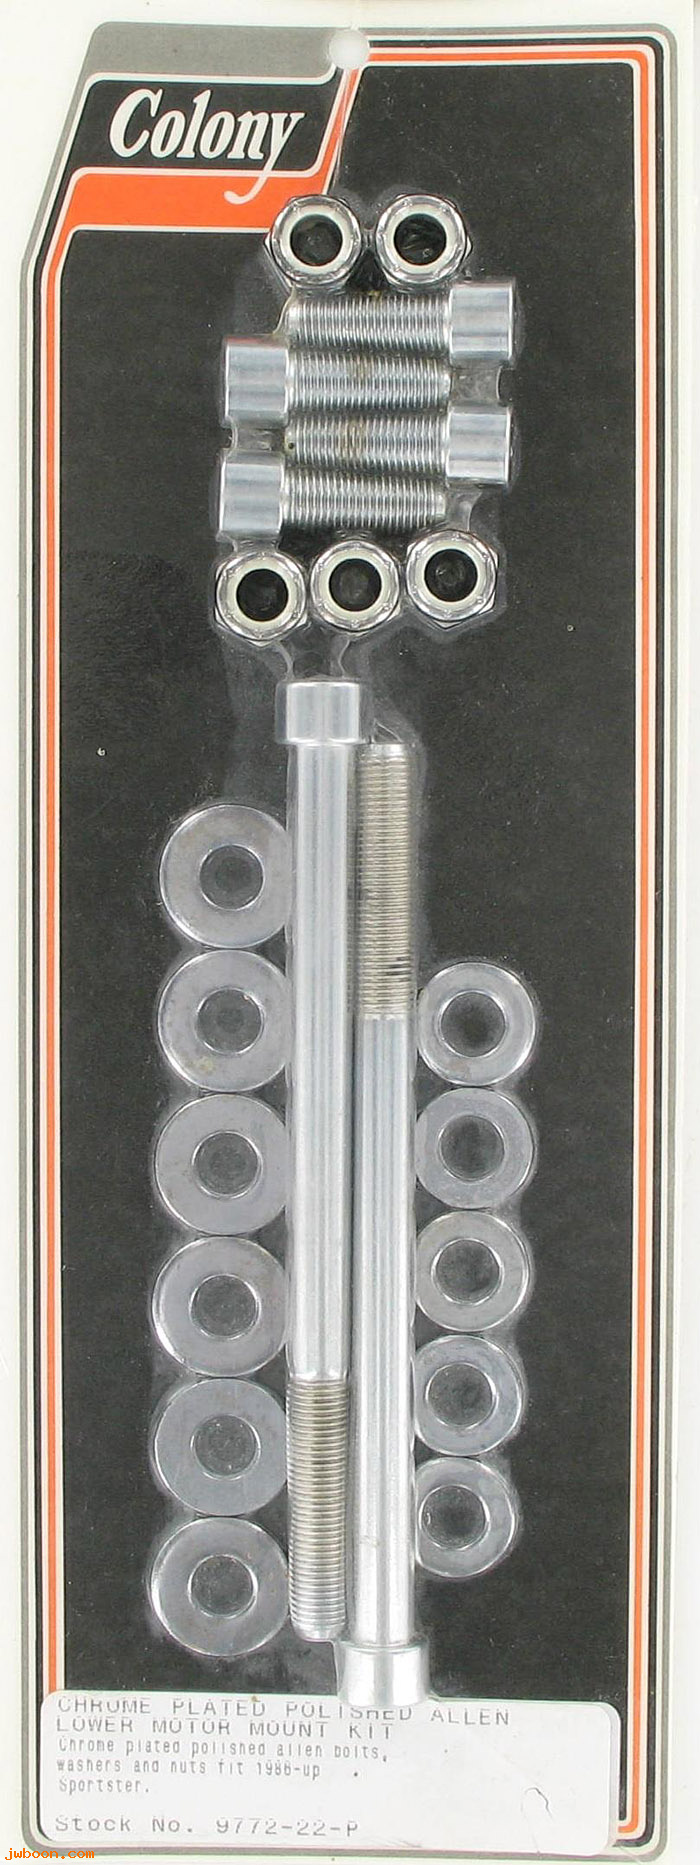 C 9772-22-P (): Lower motor mount kit, polished Allen - XL's '86-'98, in stock